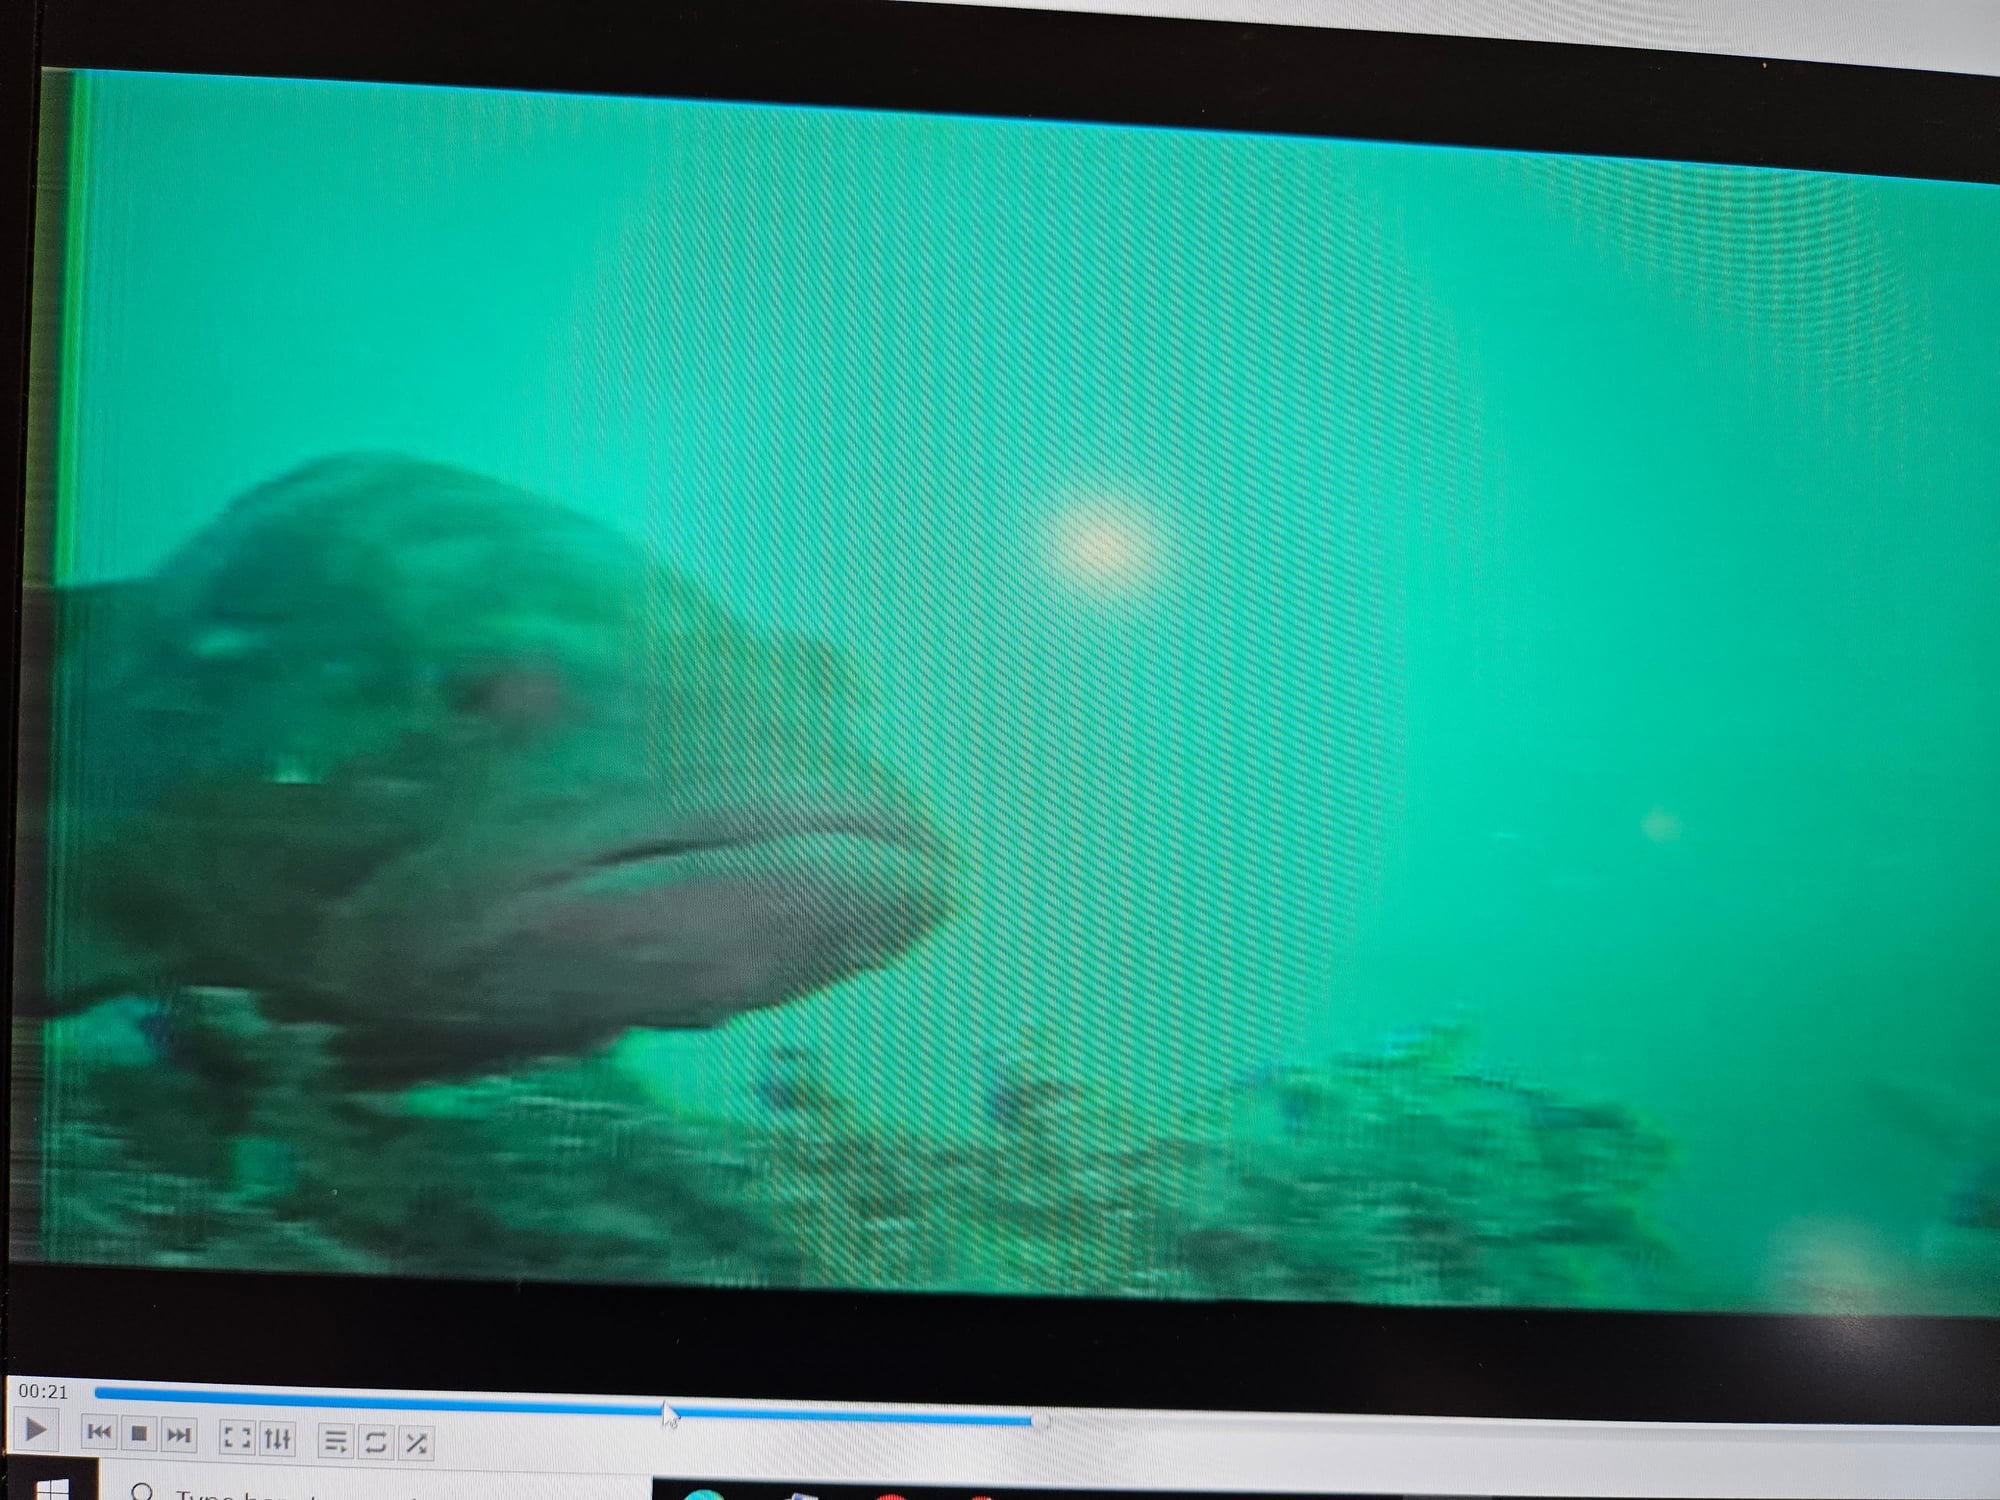 Eyoyo Underwater Fishing Camera Tripod-How to use?